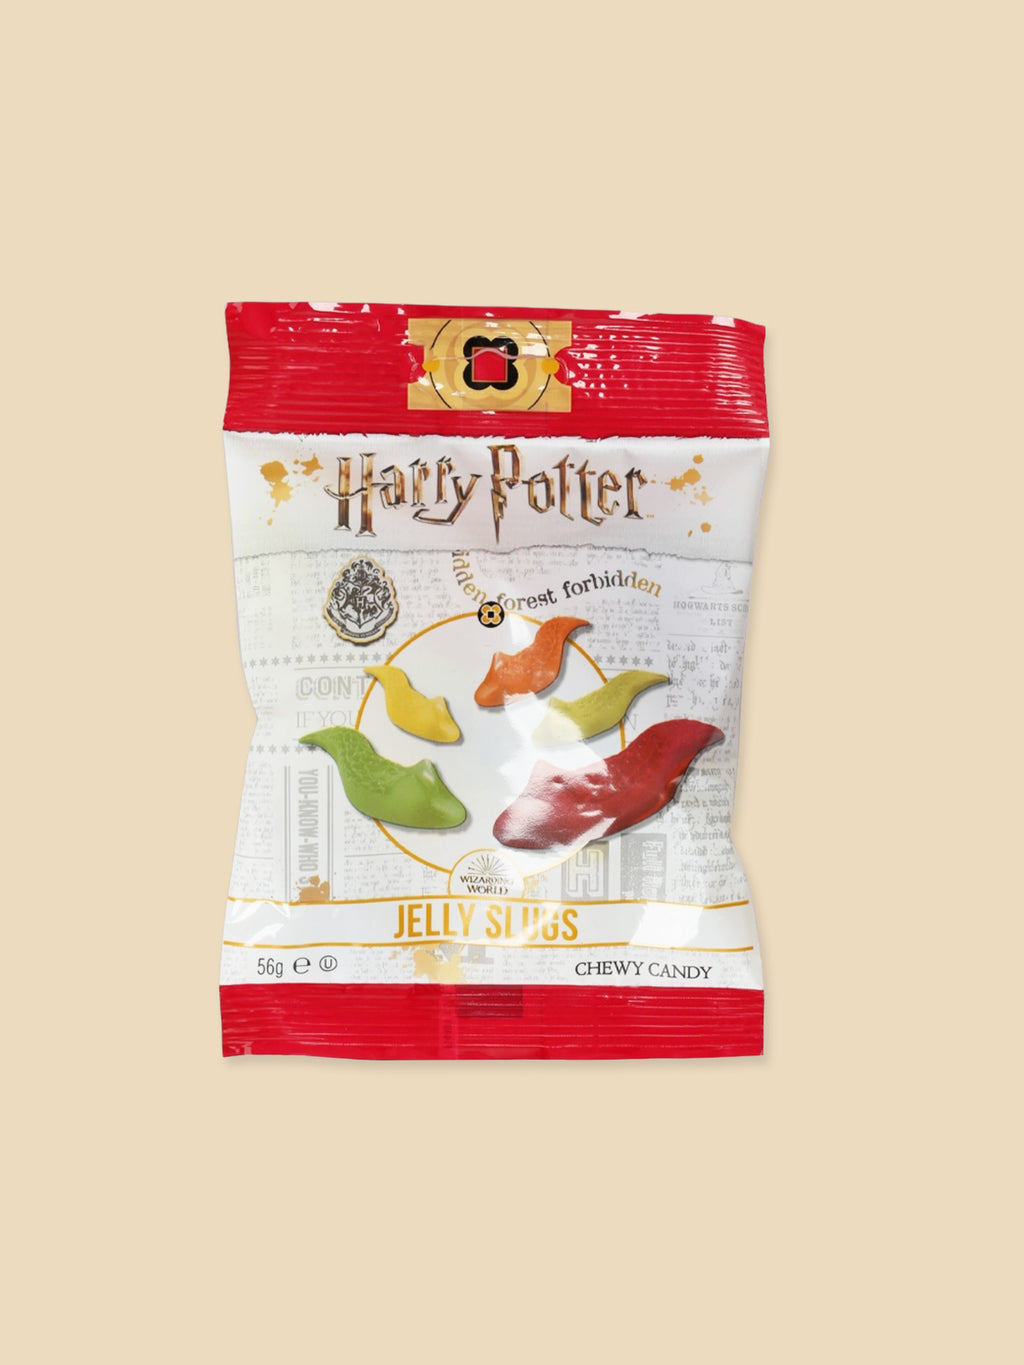 Harry Potter Jelly Slug Sweets - 56g